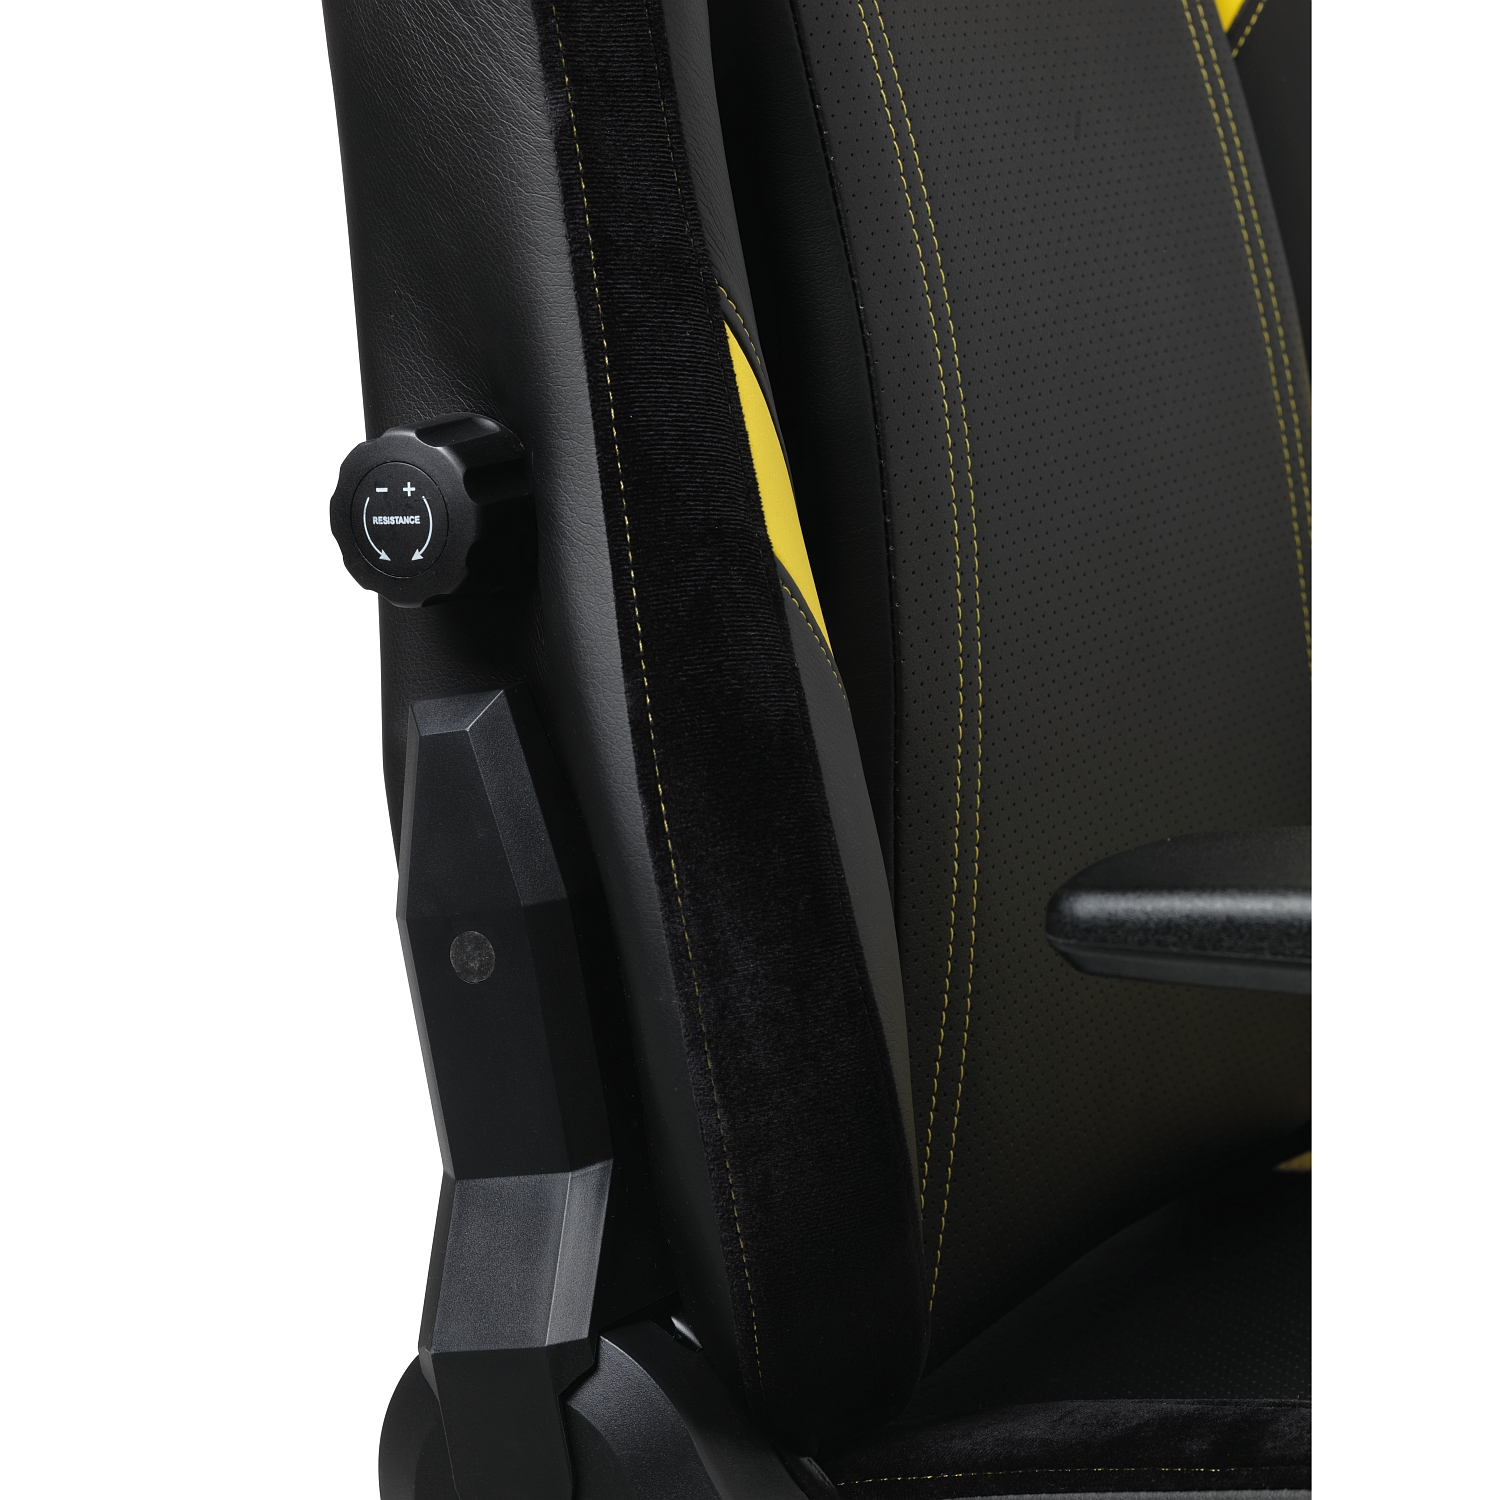 L33T Ergo E-SPORT Pro Gaming Stuhl, Schwarz / Gelb